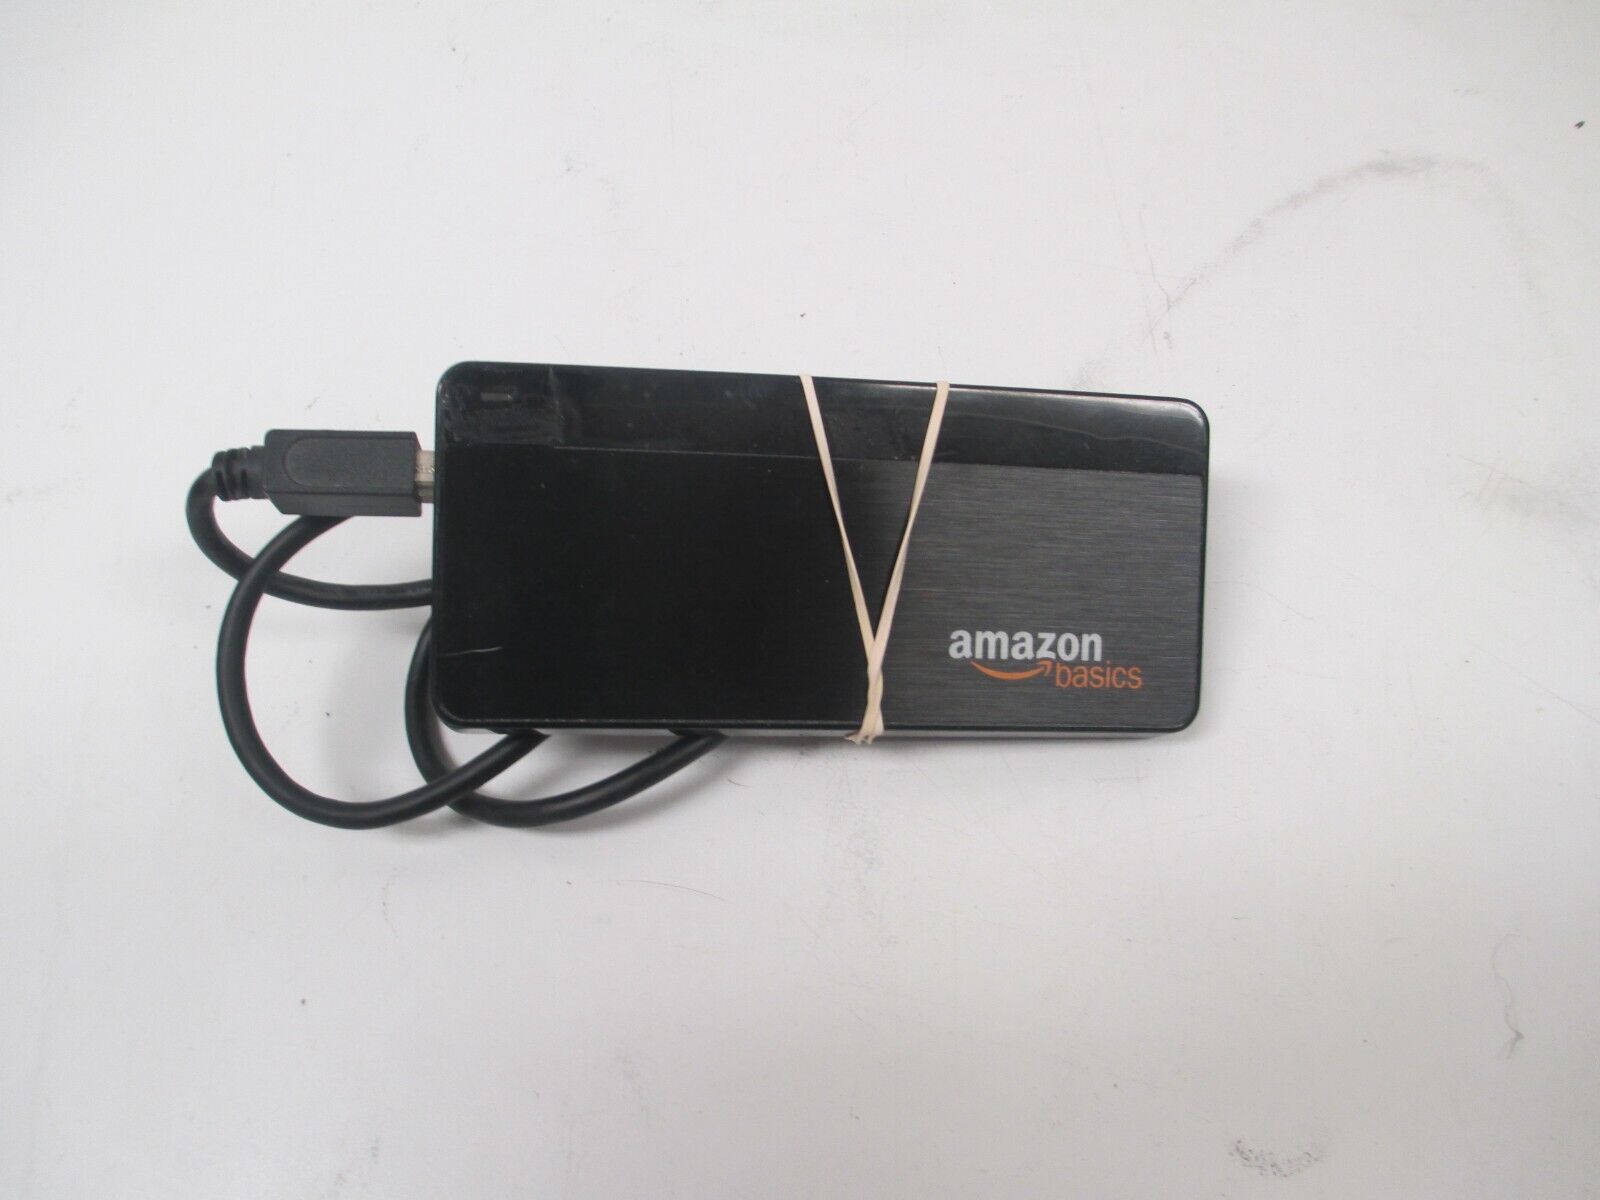 Amazon Basics 7 Port USB 3.0 Hub w/ USB Cable